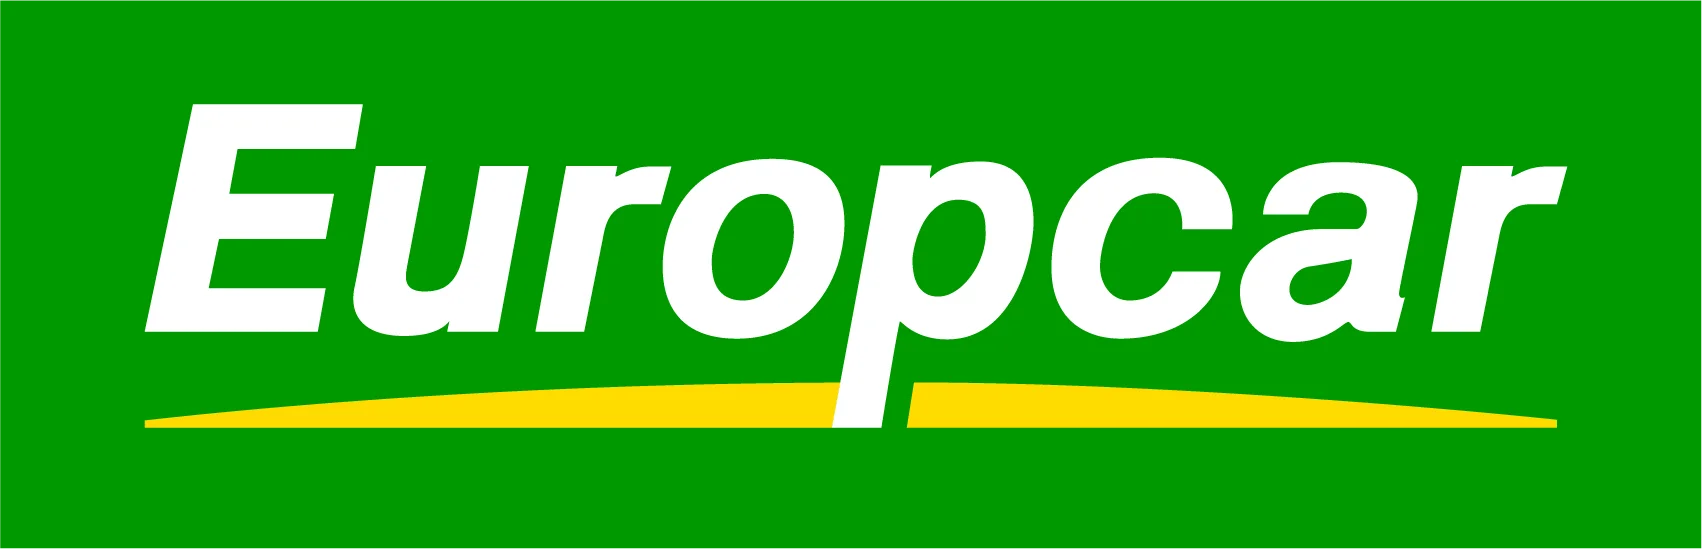 EUROPCAR logo rgb